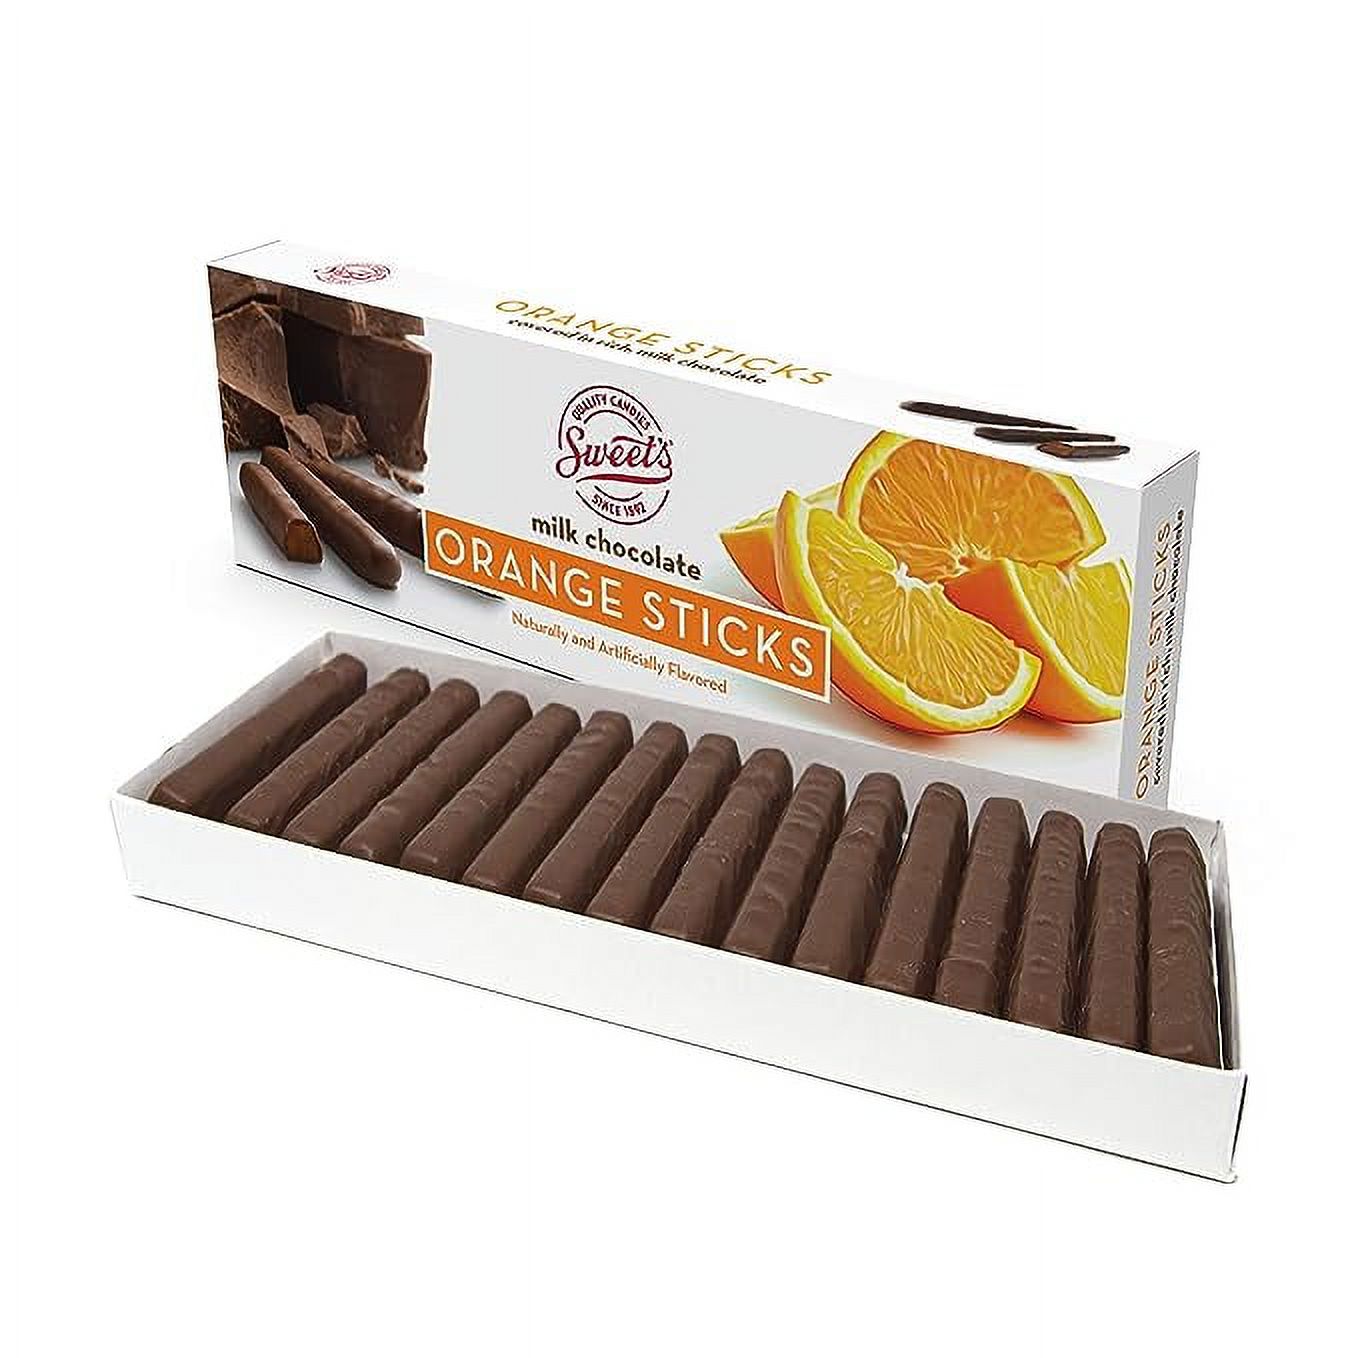 Sweet's Milk Chocolate Orange Sticks Box, 10.5 oz. - image 2 of 5